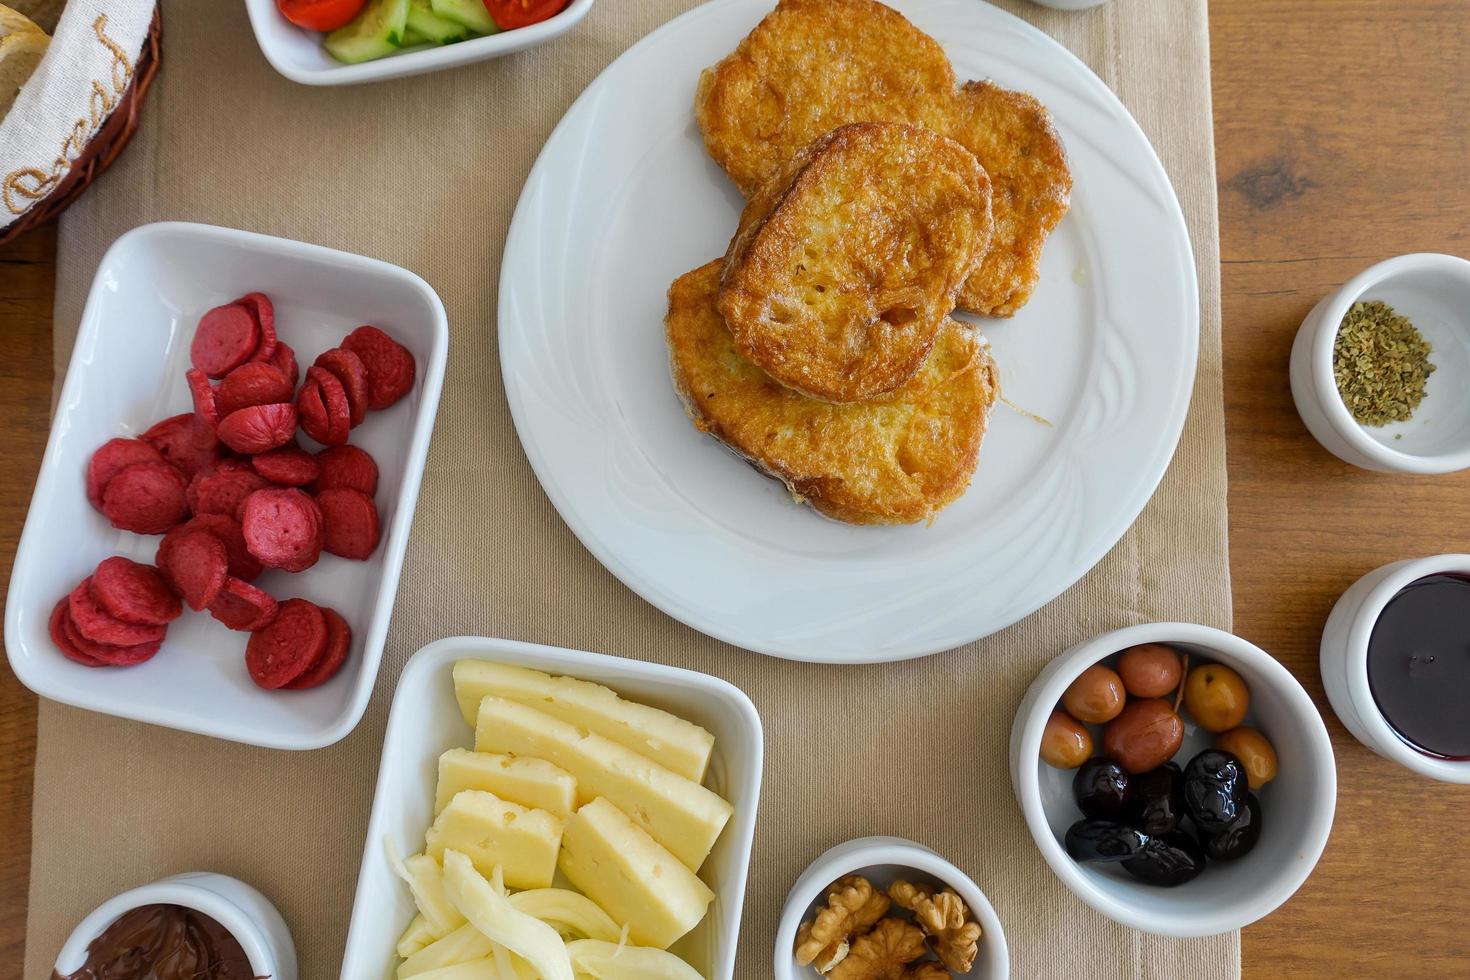 Turkish Traditional Breakfast Table photo